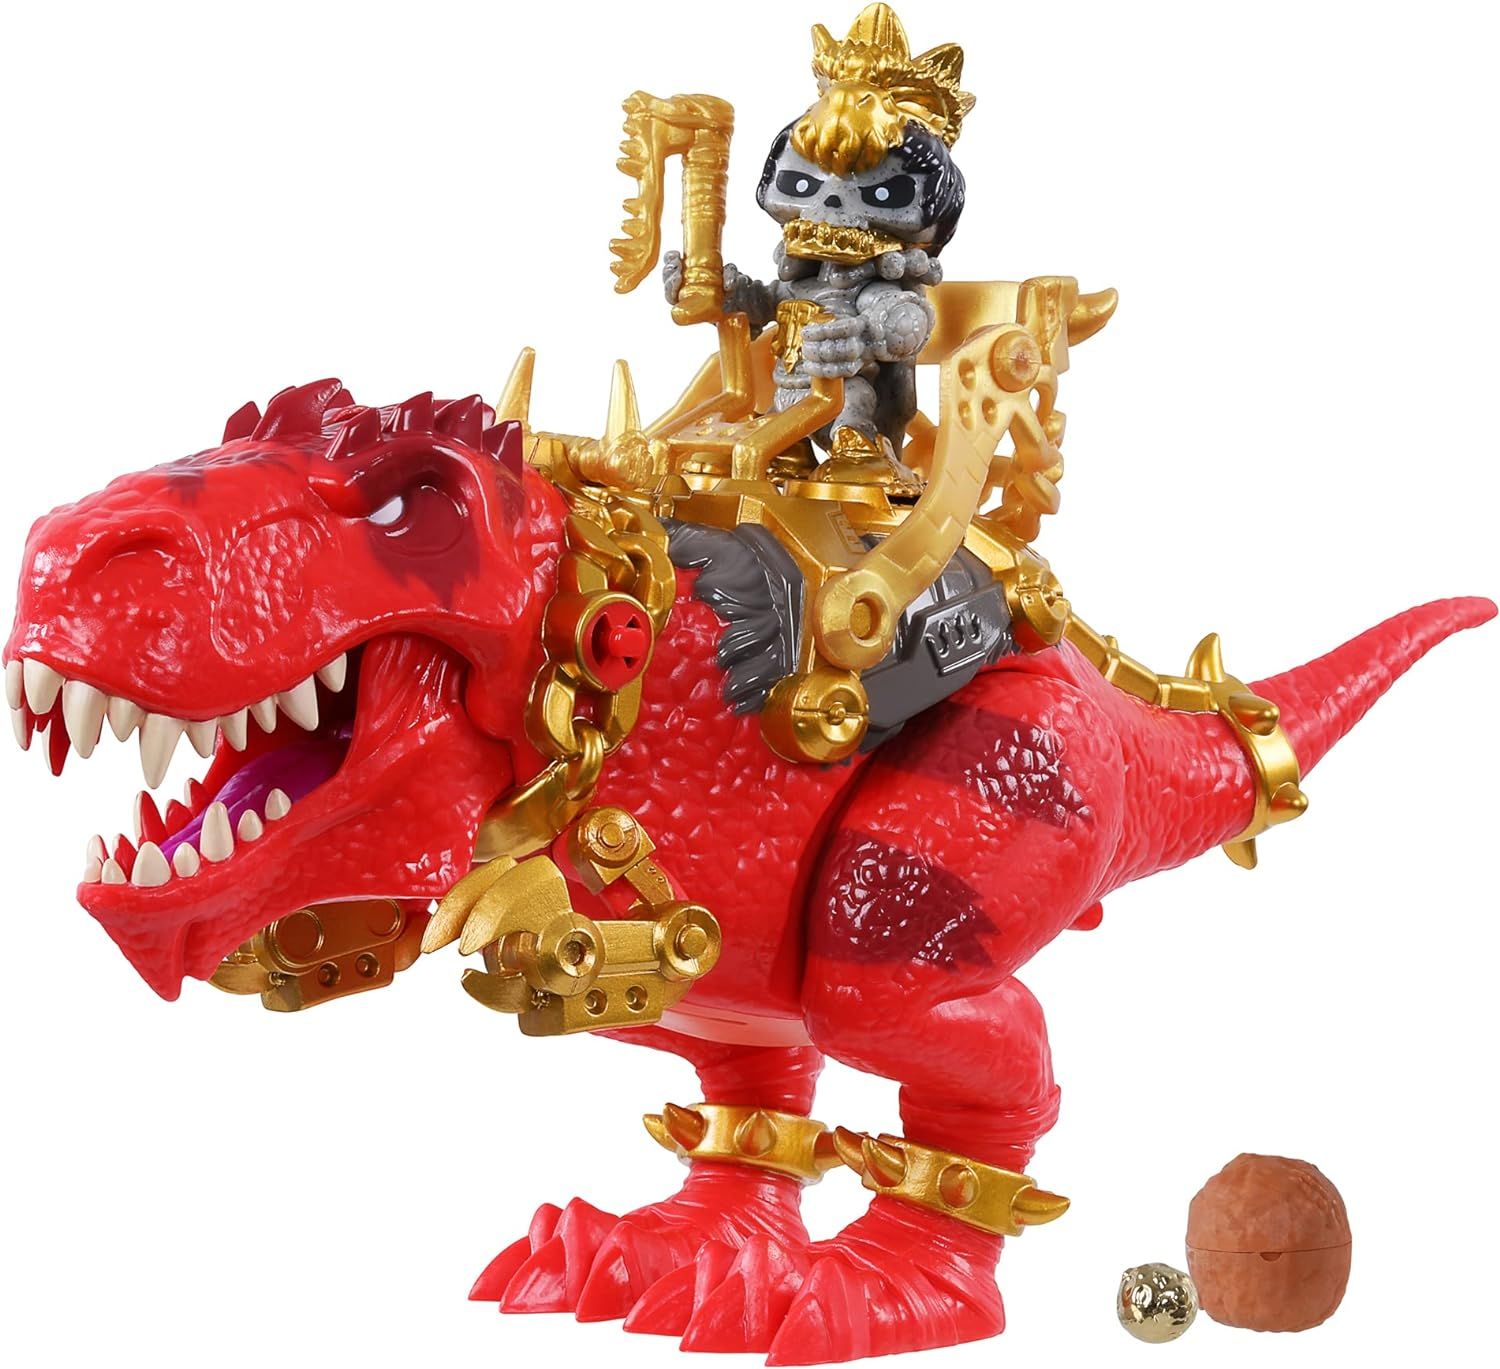 Treasure x gold. Treasure x Dino Gold. Трежер Икс монстр Голд. Treasure x Dino Gold набор. Treasure x Monster Gold Dino.